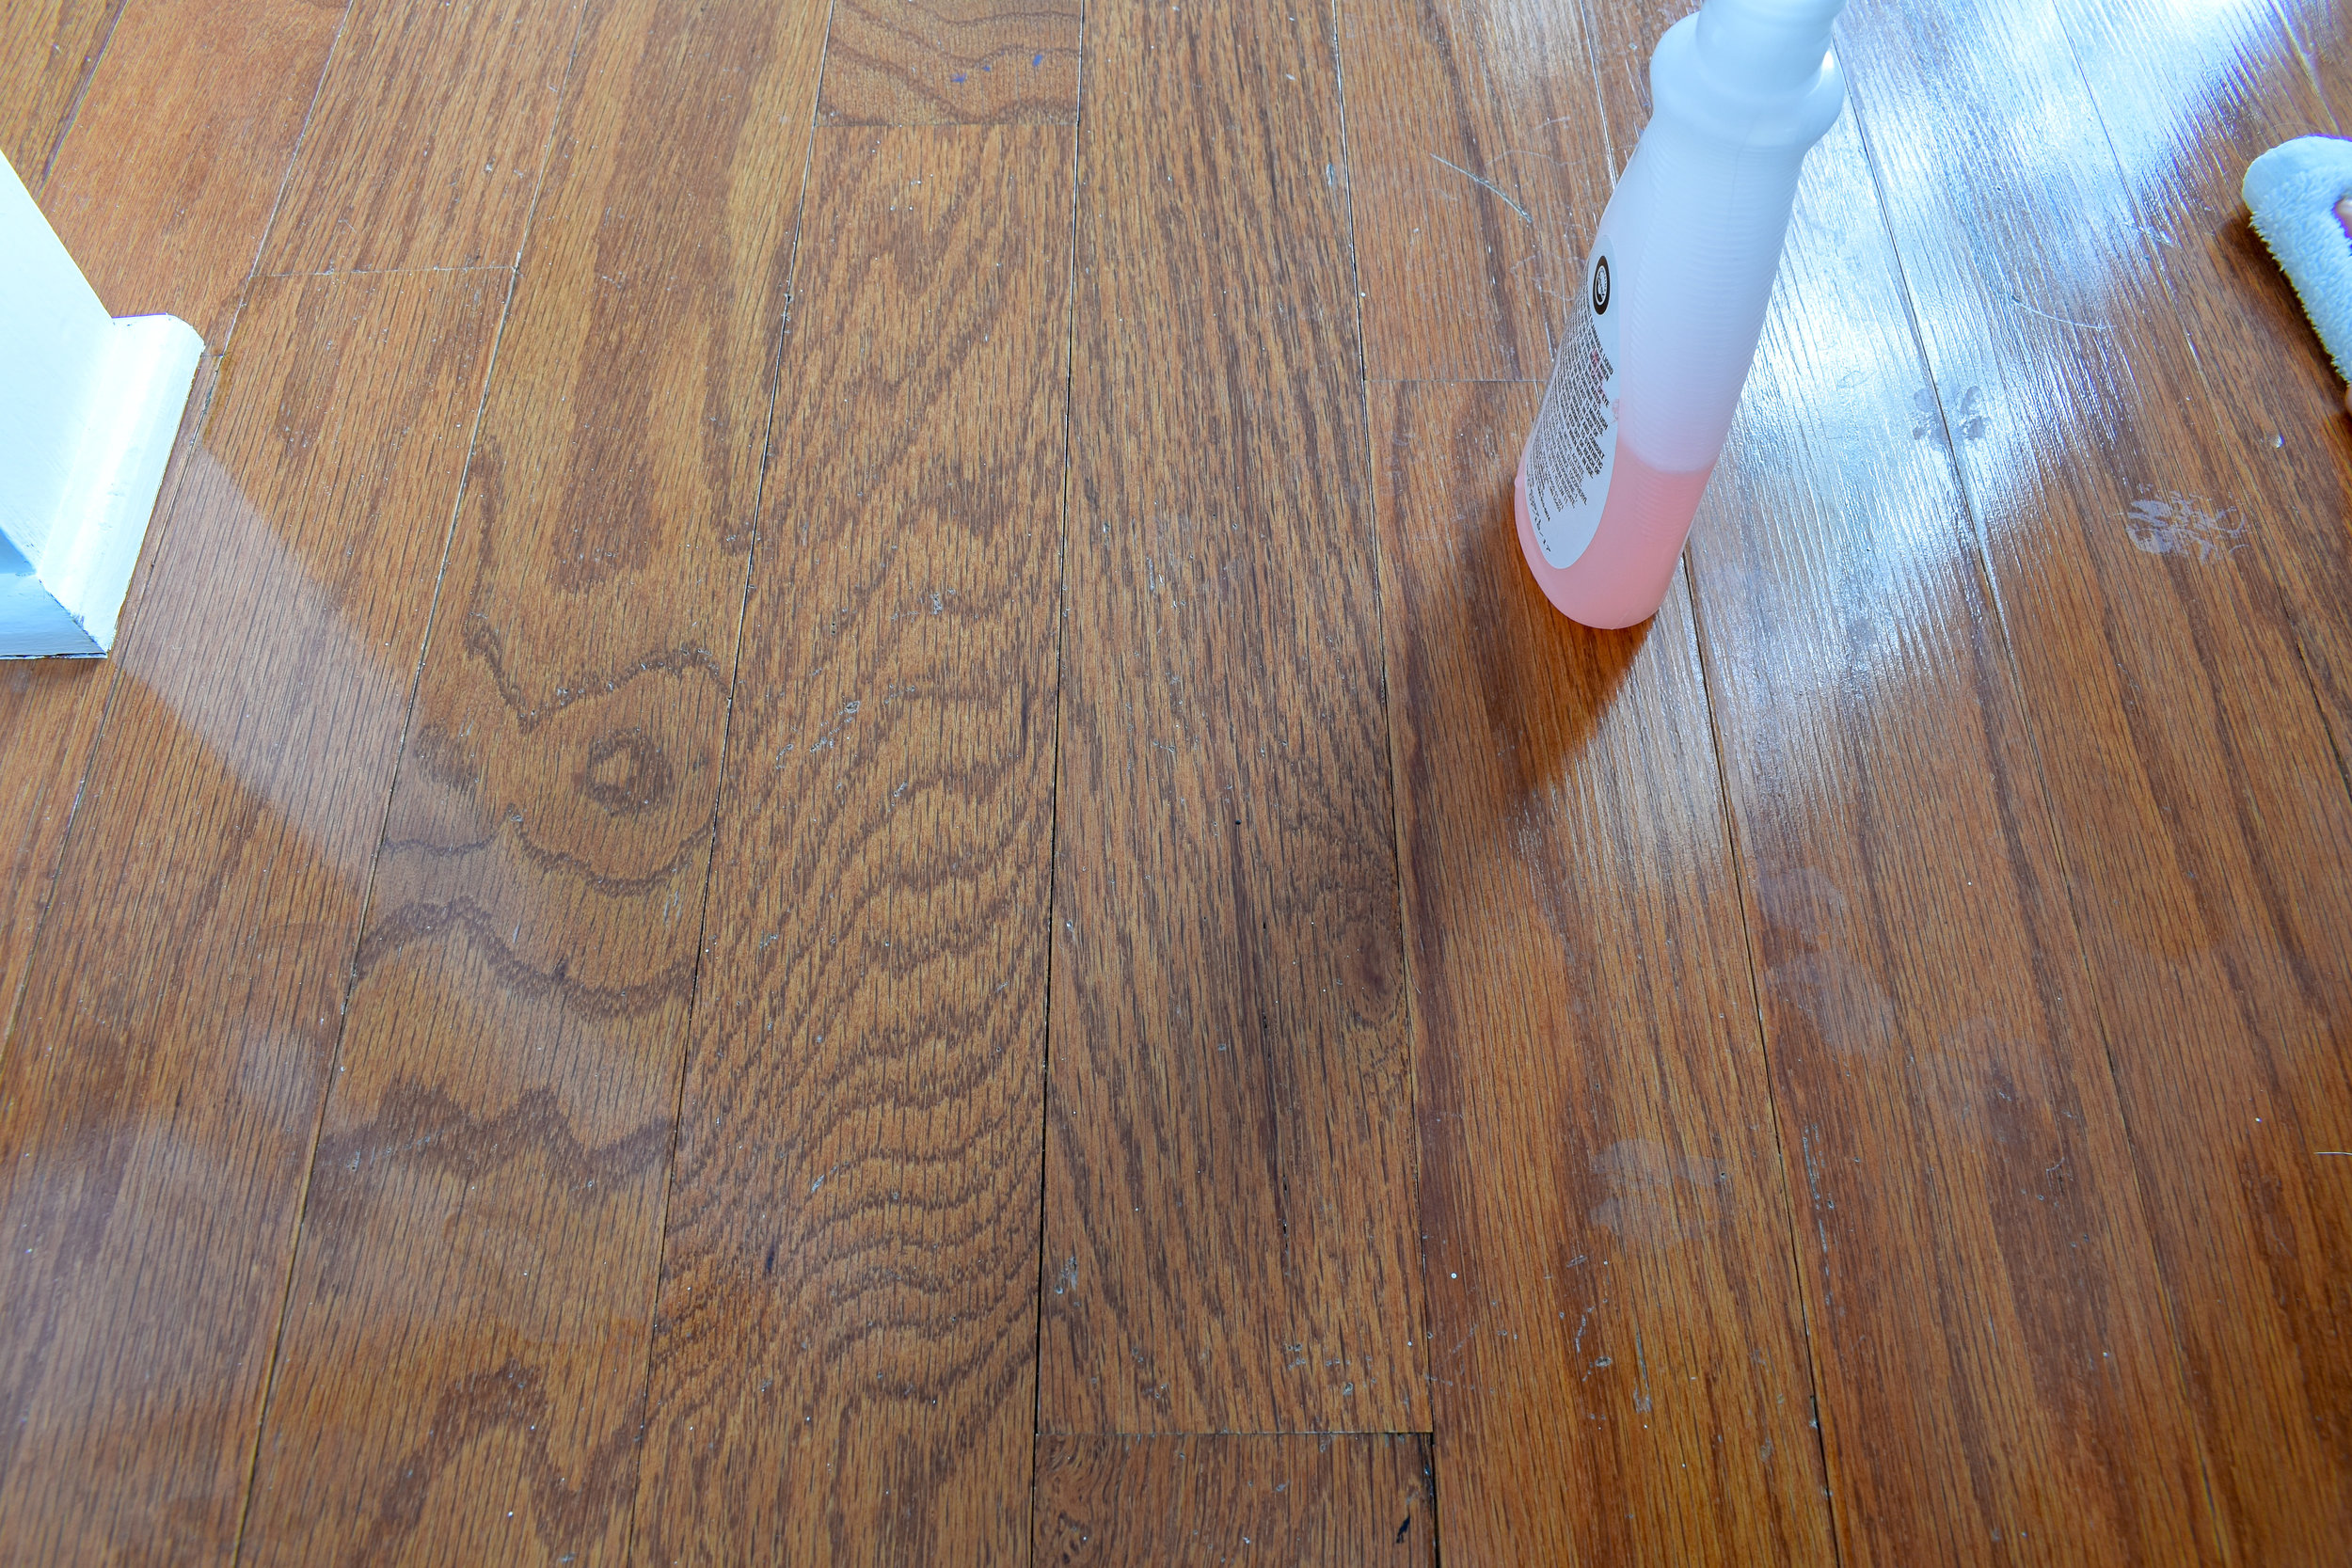 How To Make Old Hardwood Floors Shine, How To Add Shine Engineered Hardwood Floors